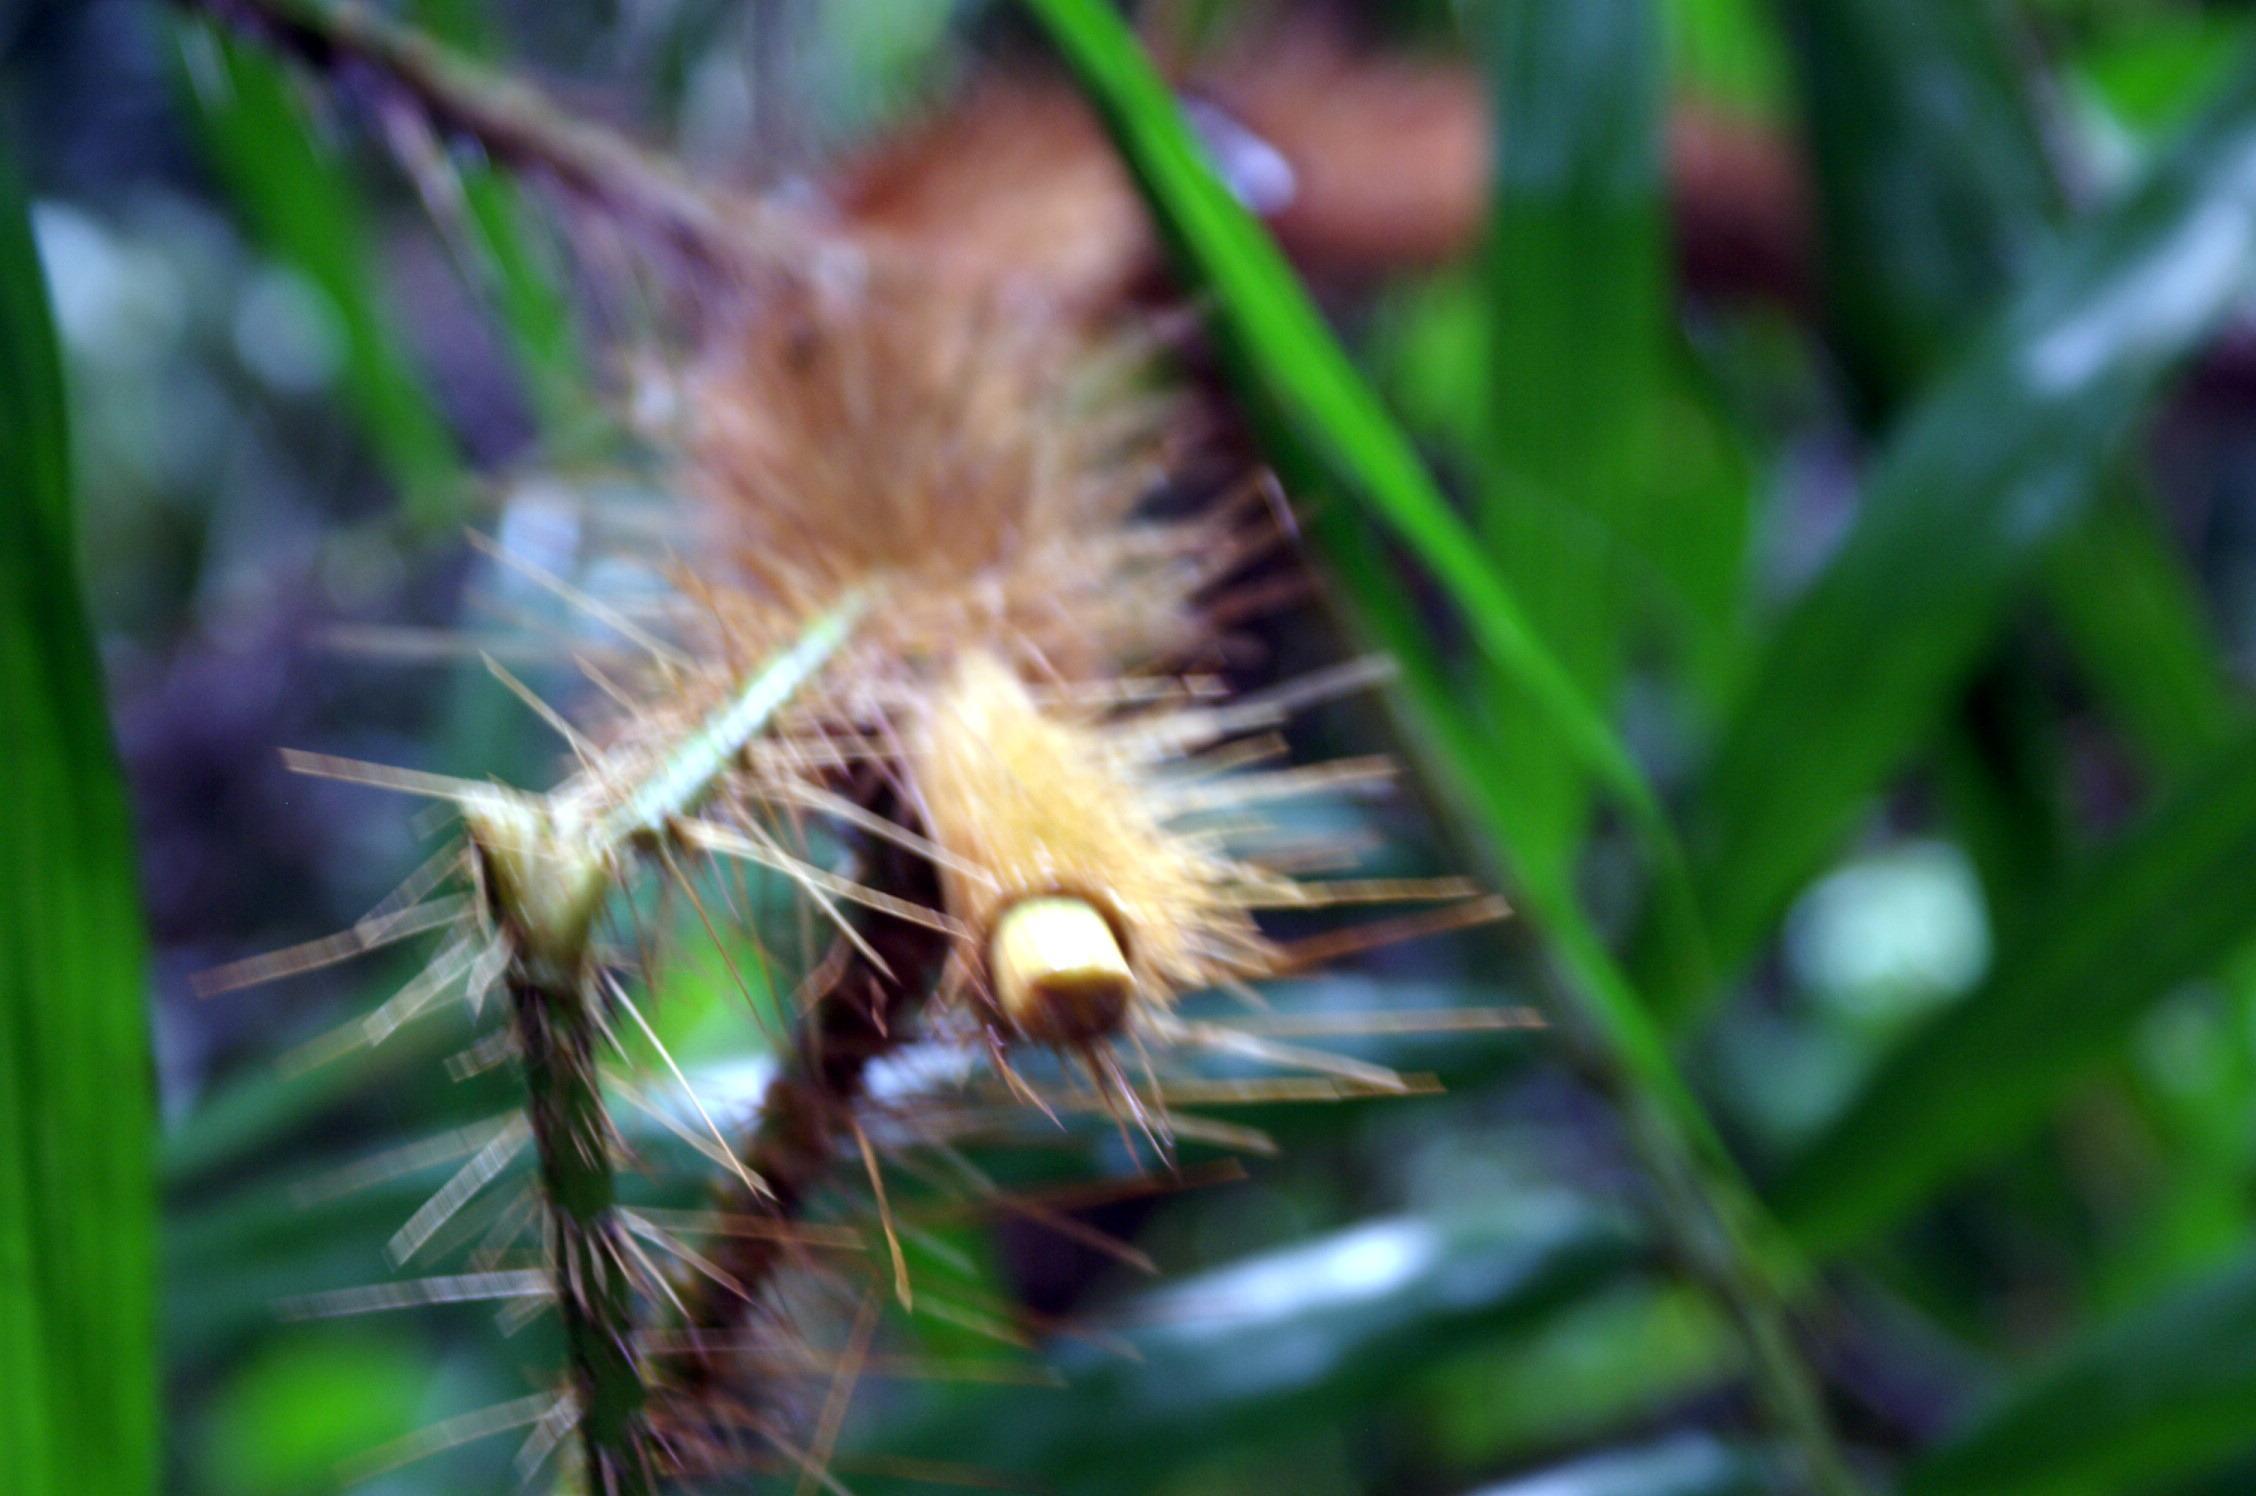 Rattan growing in the wet rainforest near Cape Tribulation